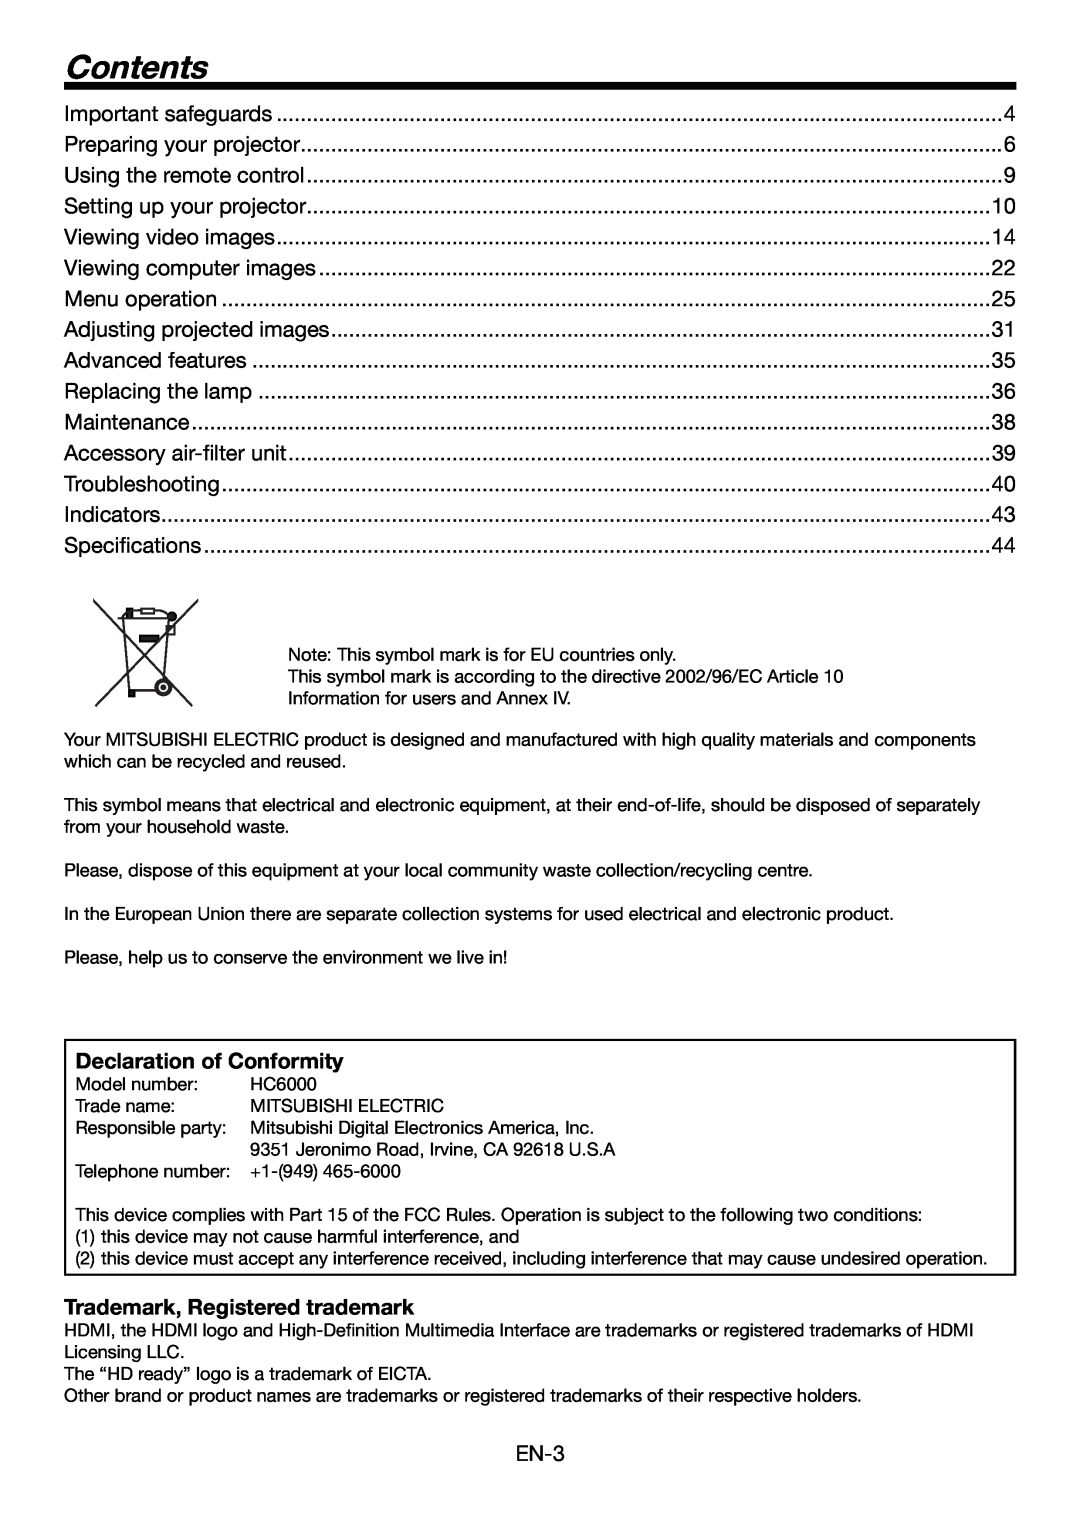 Mitsubishi Electronics HC6000 user manual Contents, Declaration of Conformity, Trademark, Registered trademark 